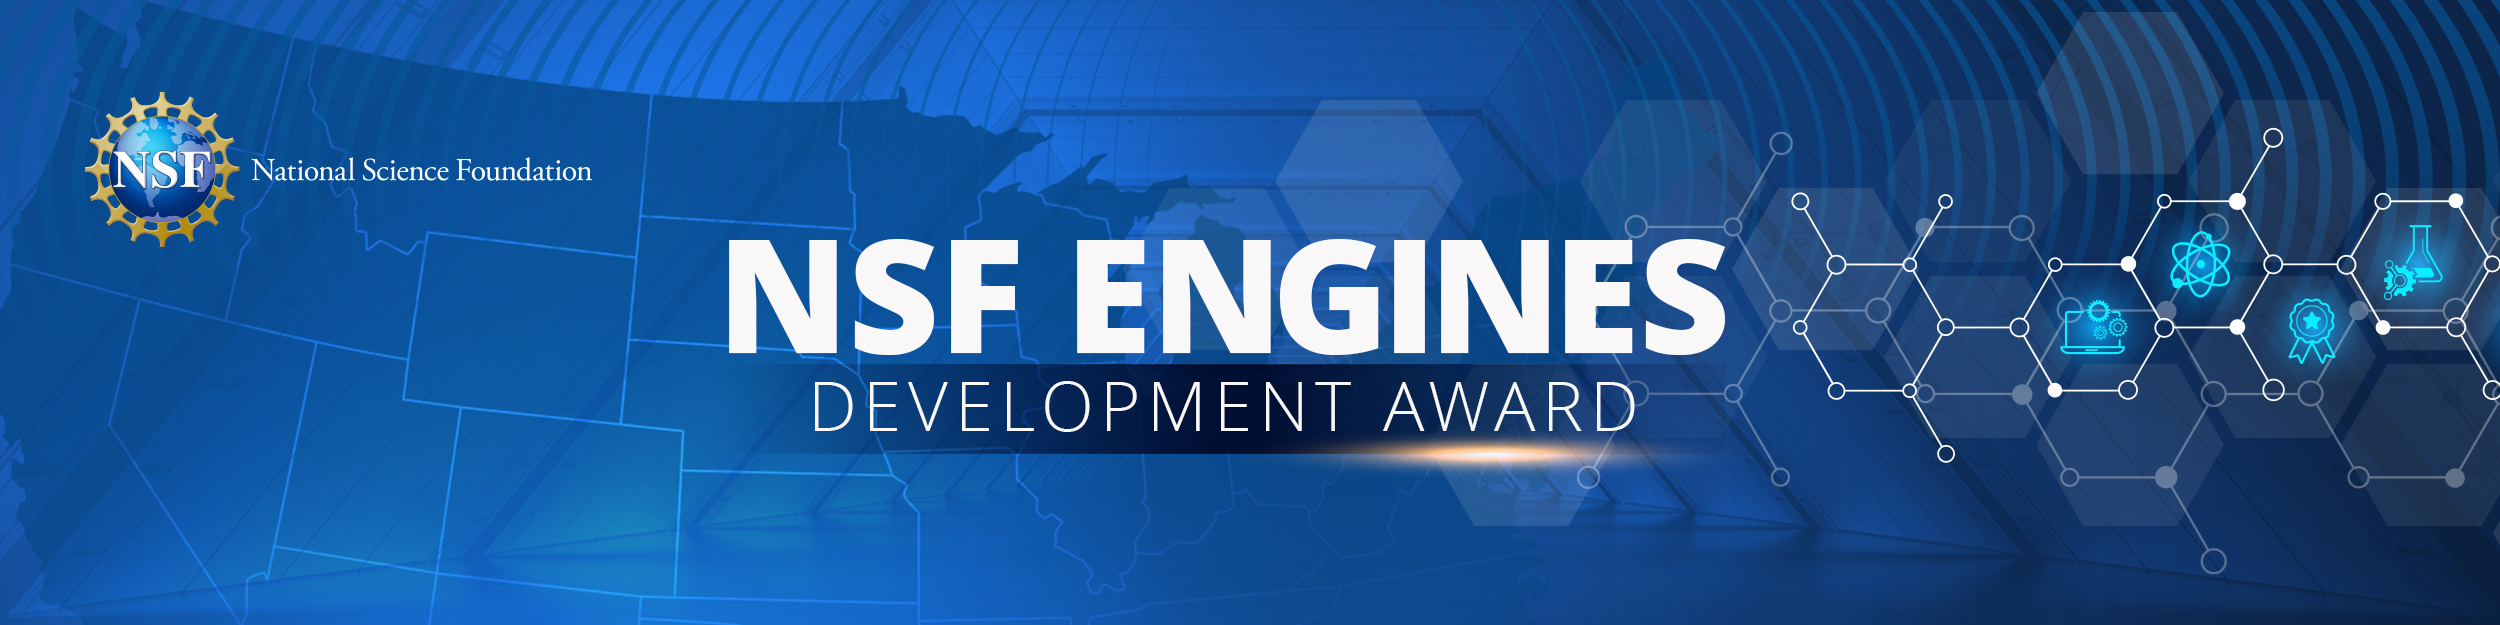 nsf engines development award graphic